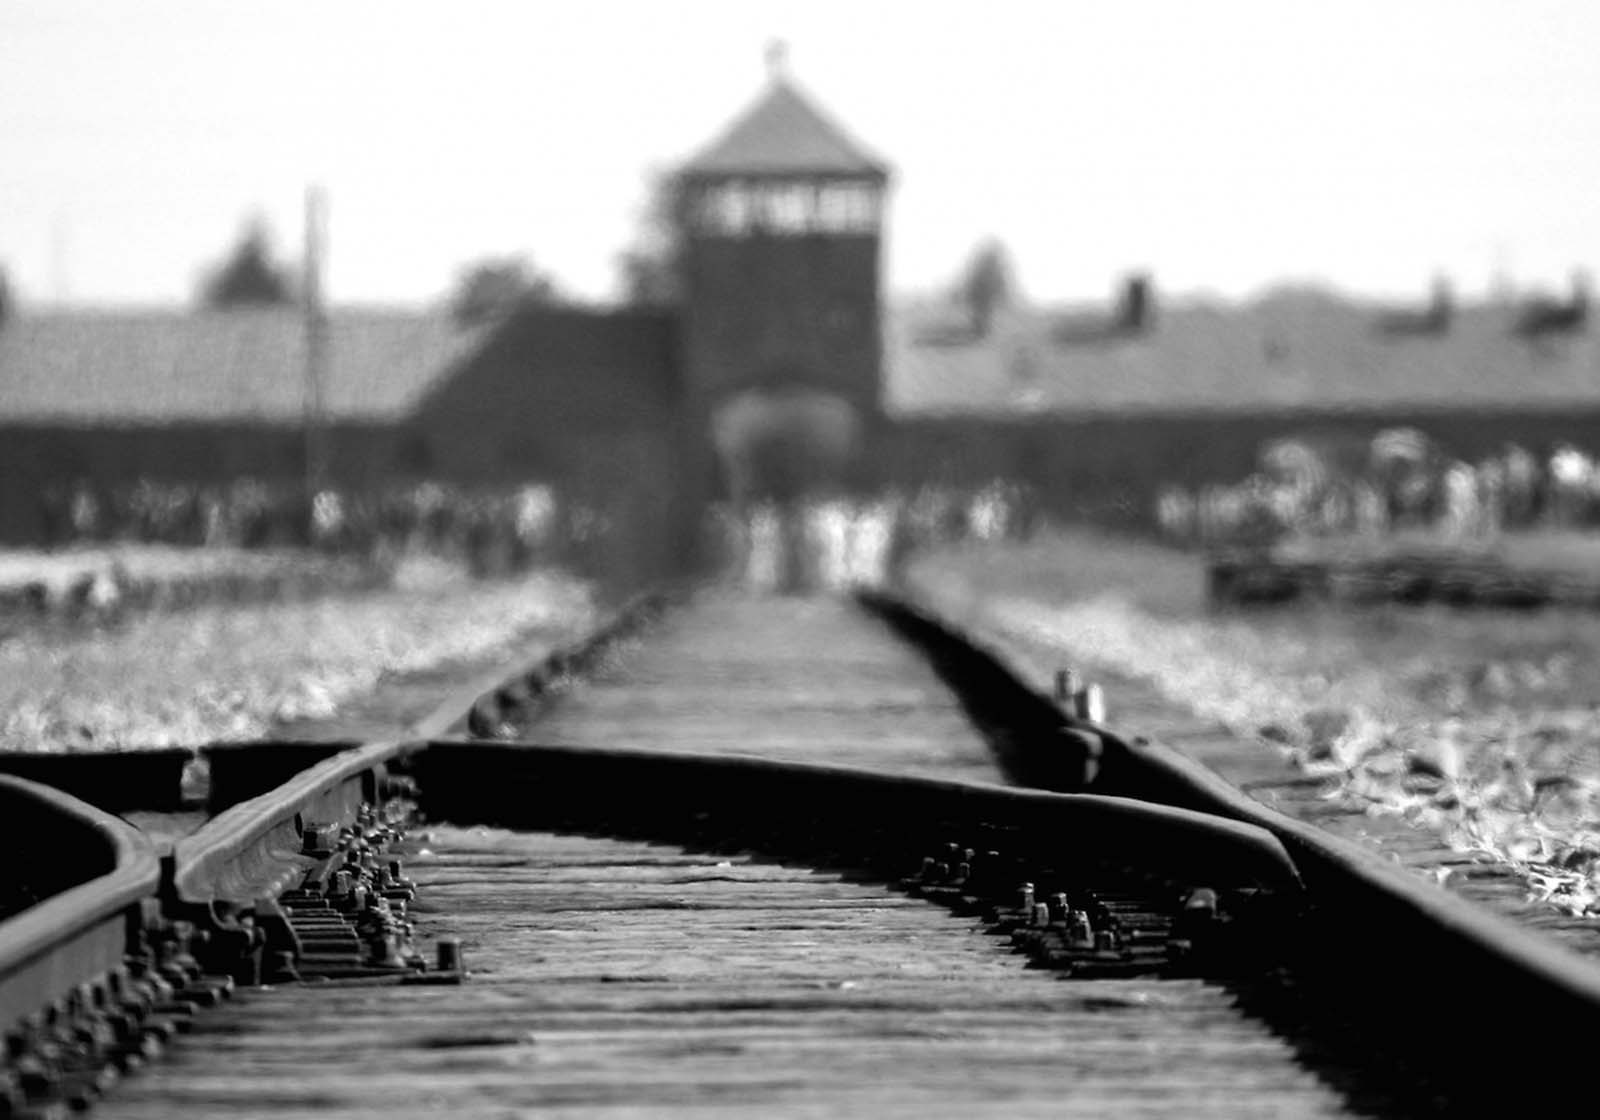 Did Hitler ever visit concentration camps?